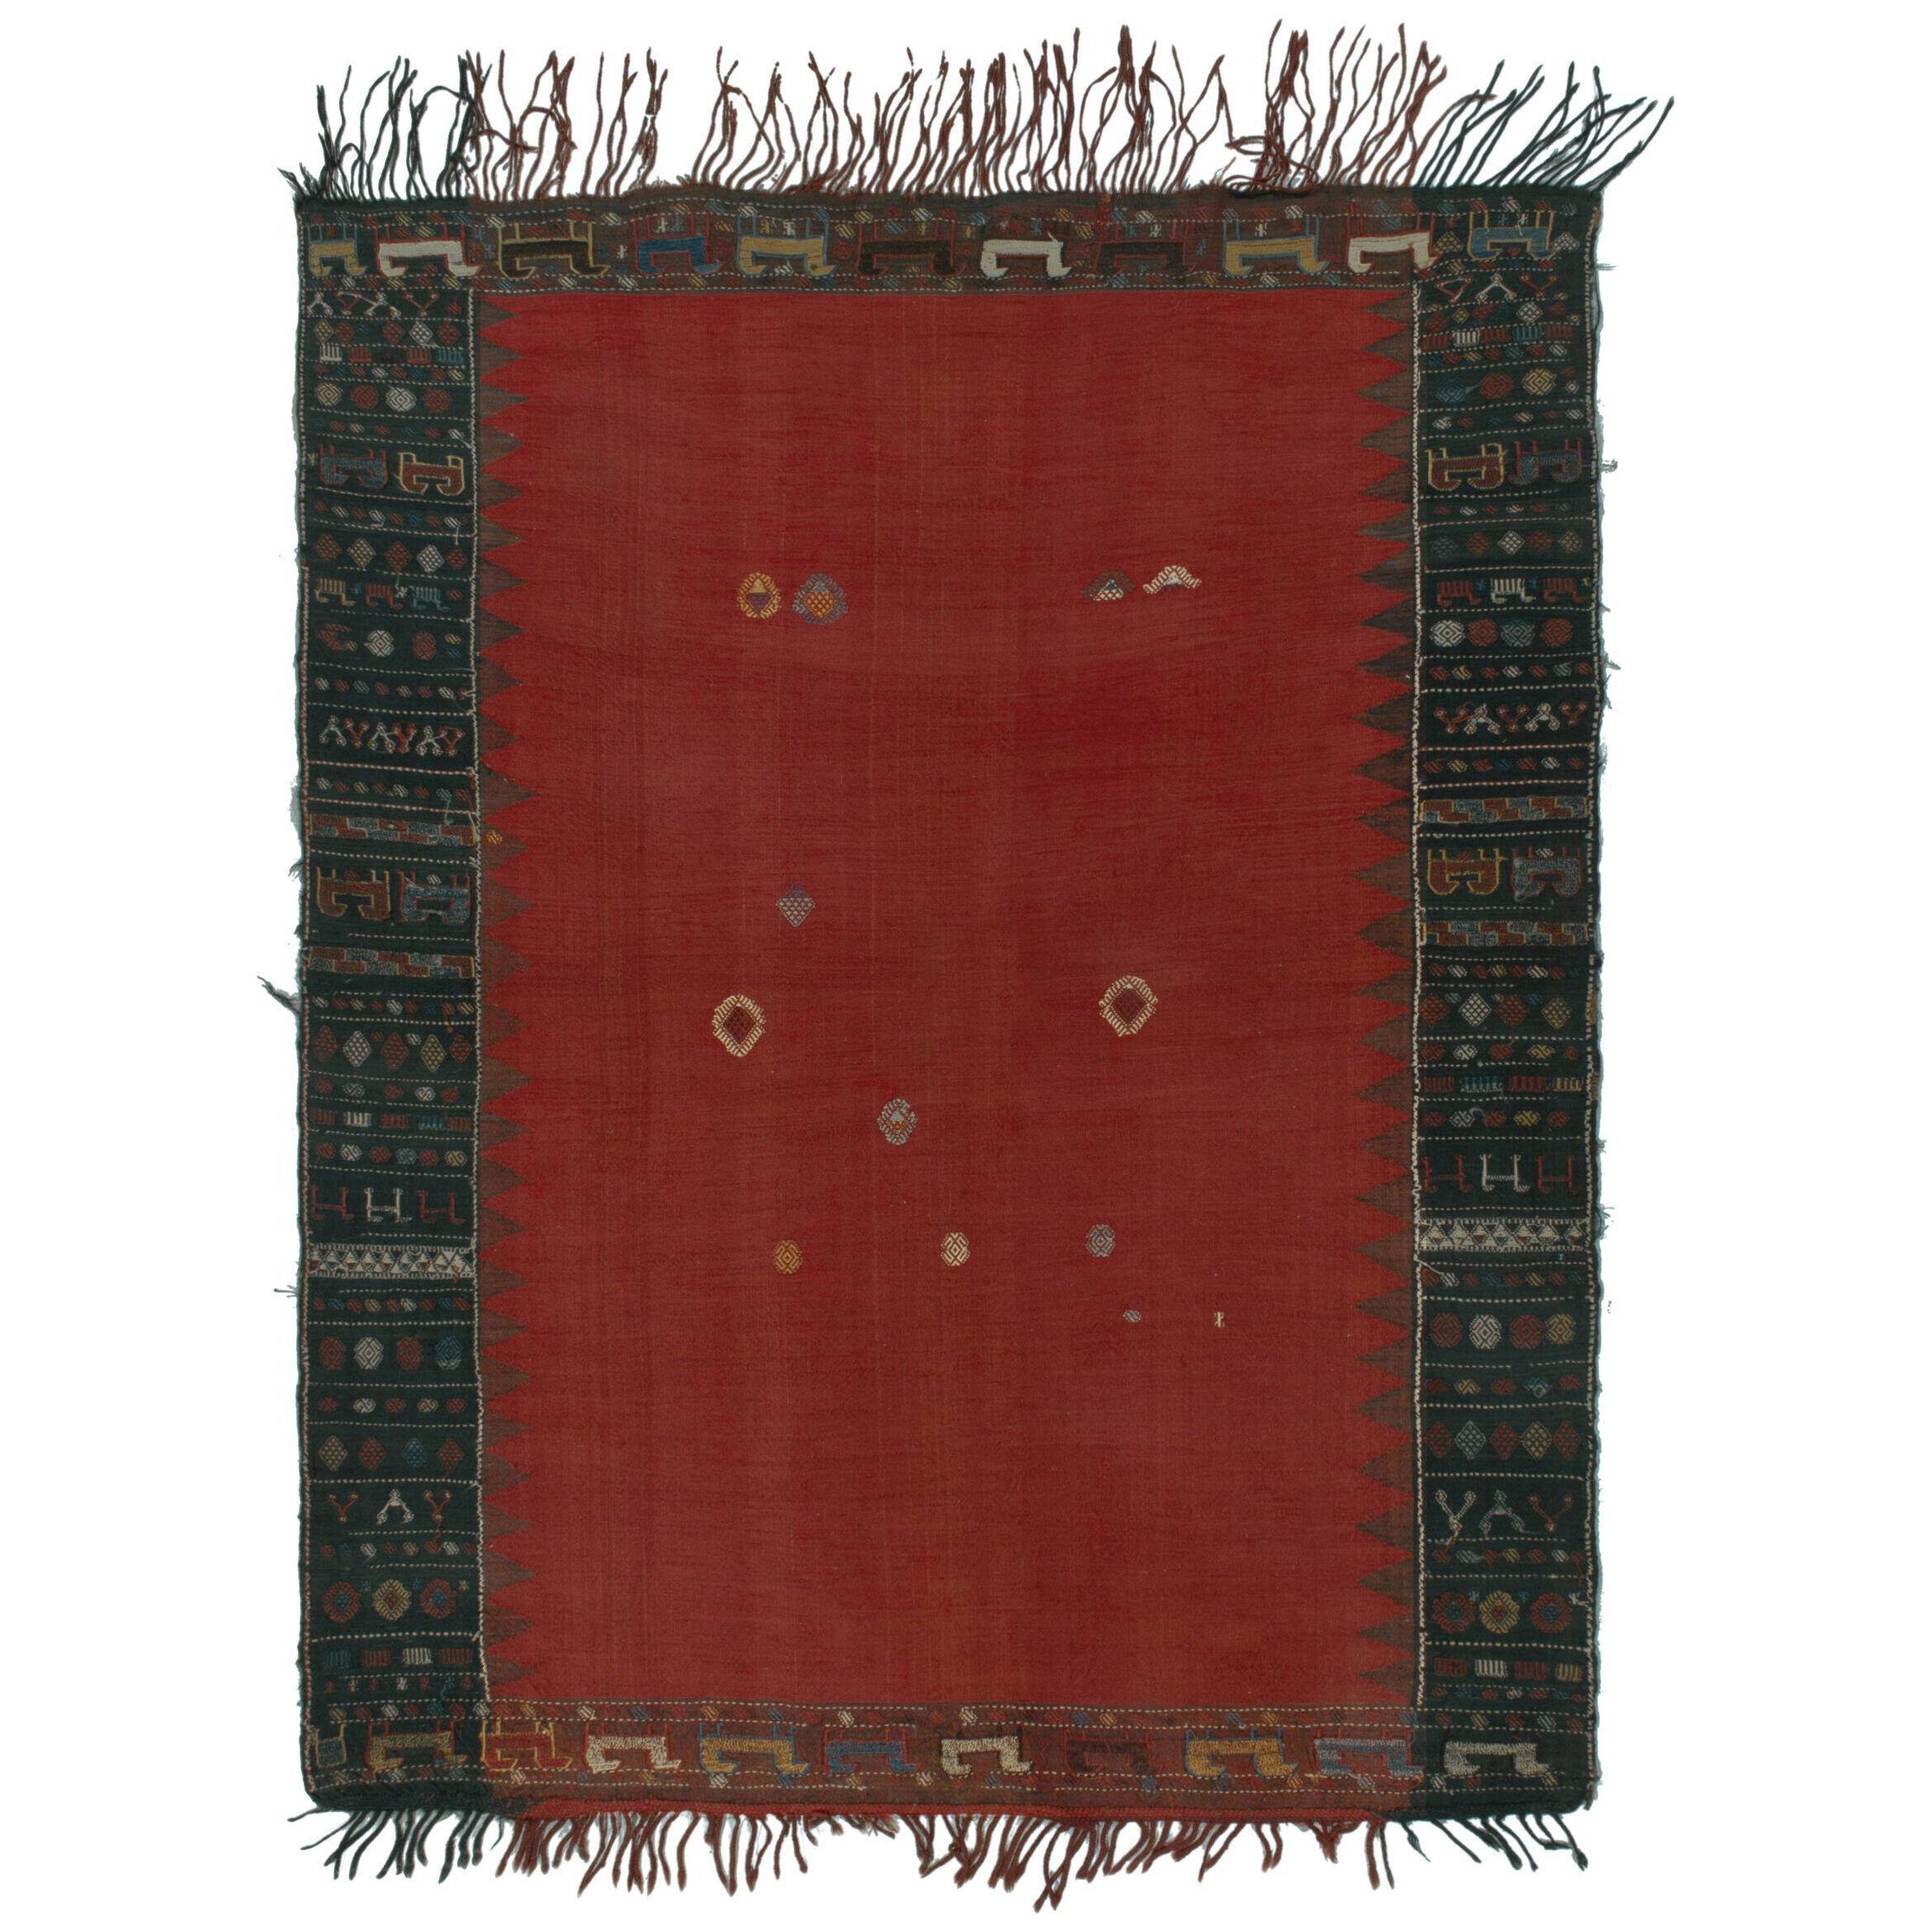 Antique Soumak Kilim Rug in Red, Black Border With Tribal Pattern Motifs